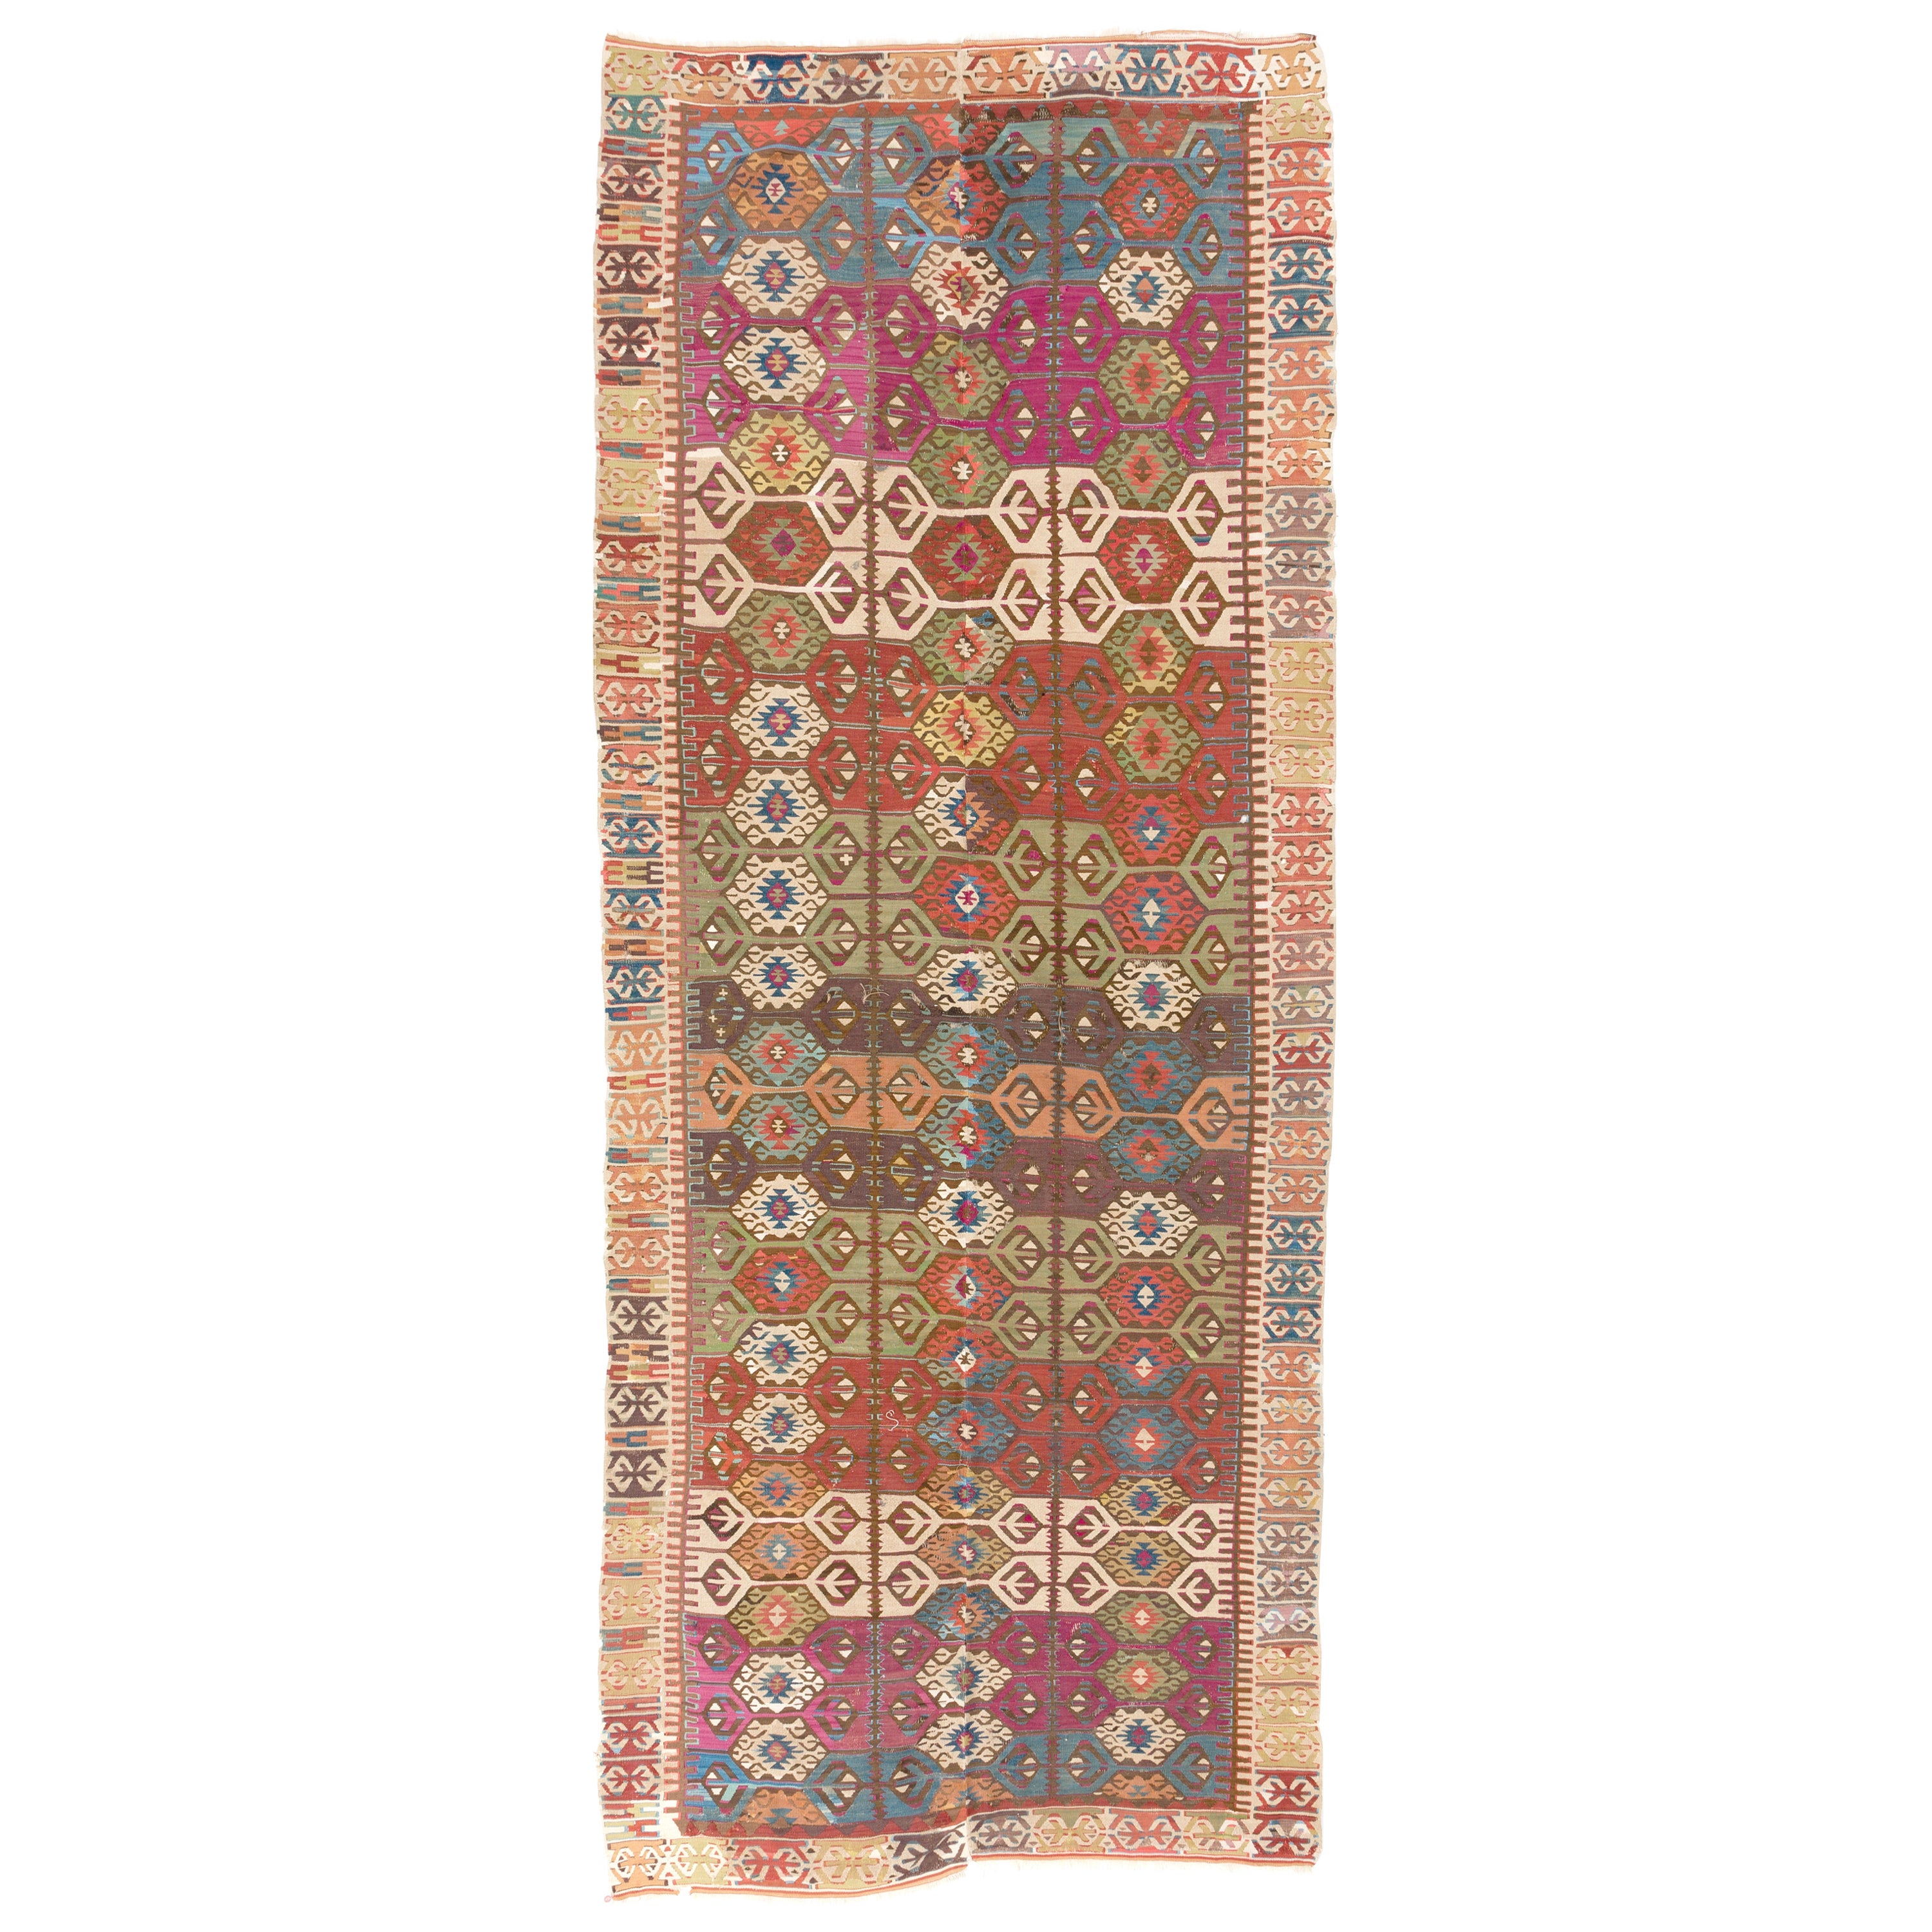 4.8x12.2 ft Antique Turkish Konya Kilim Rug, Flat-Weave Floor Covering, Ca 1890